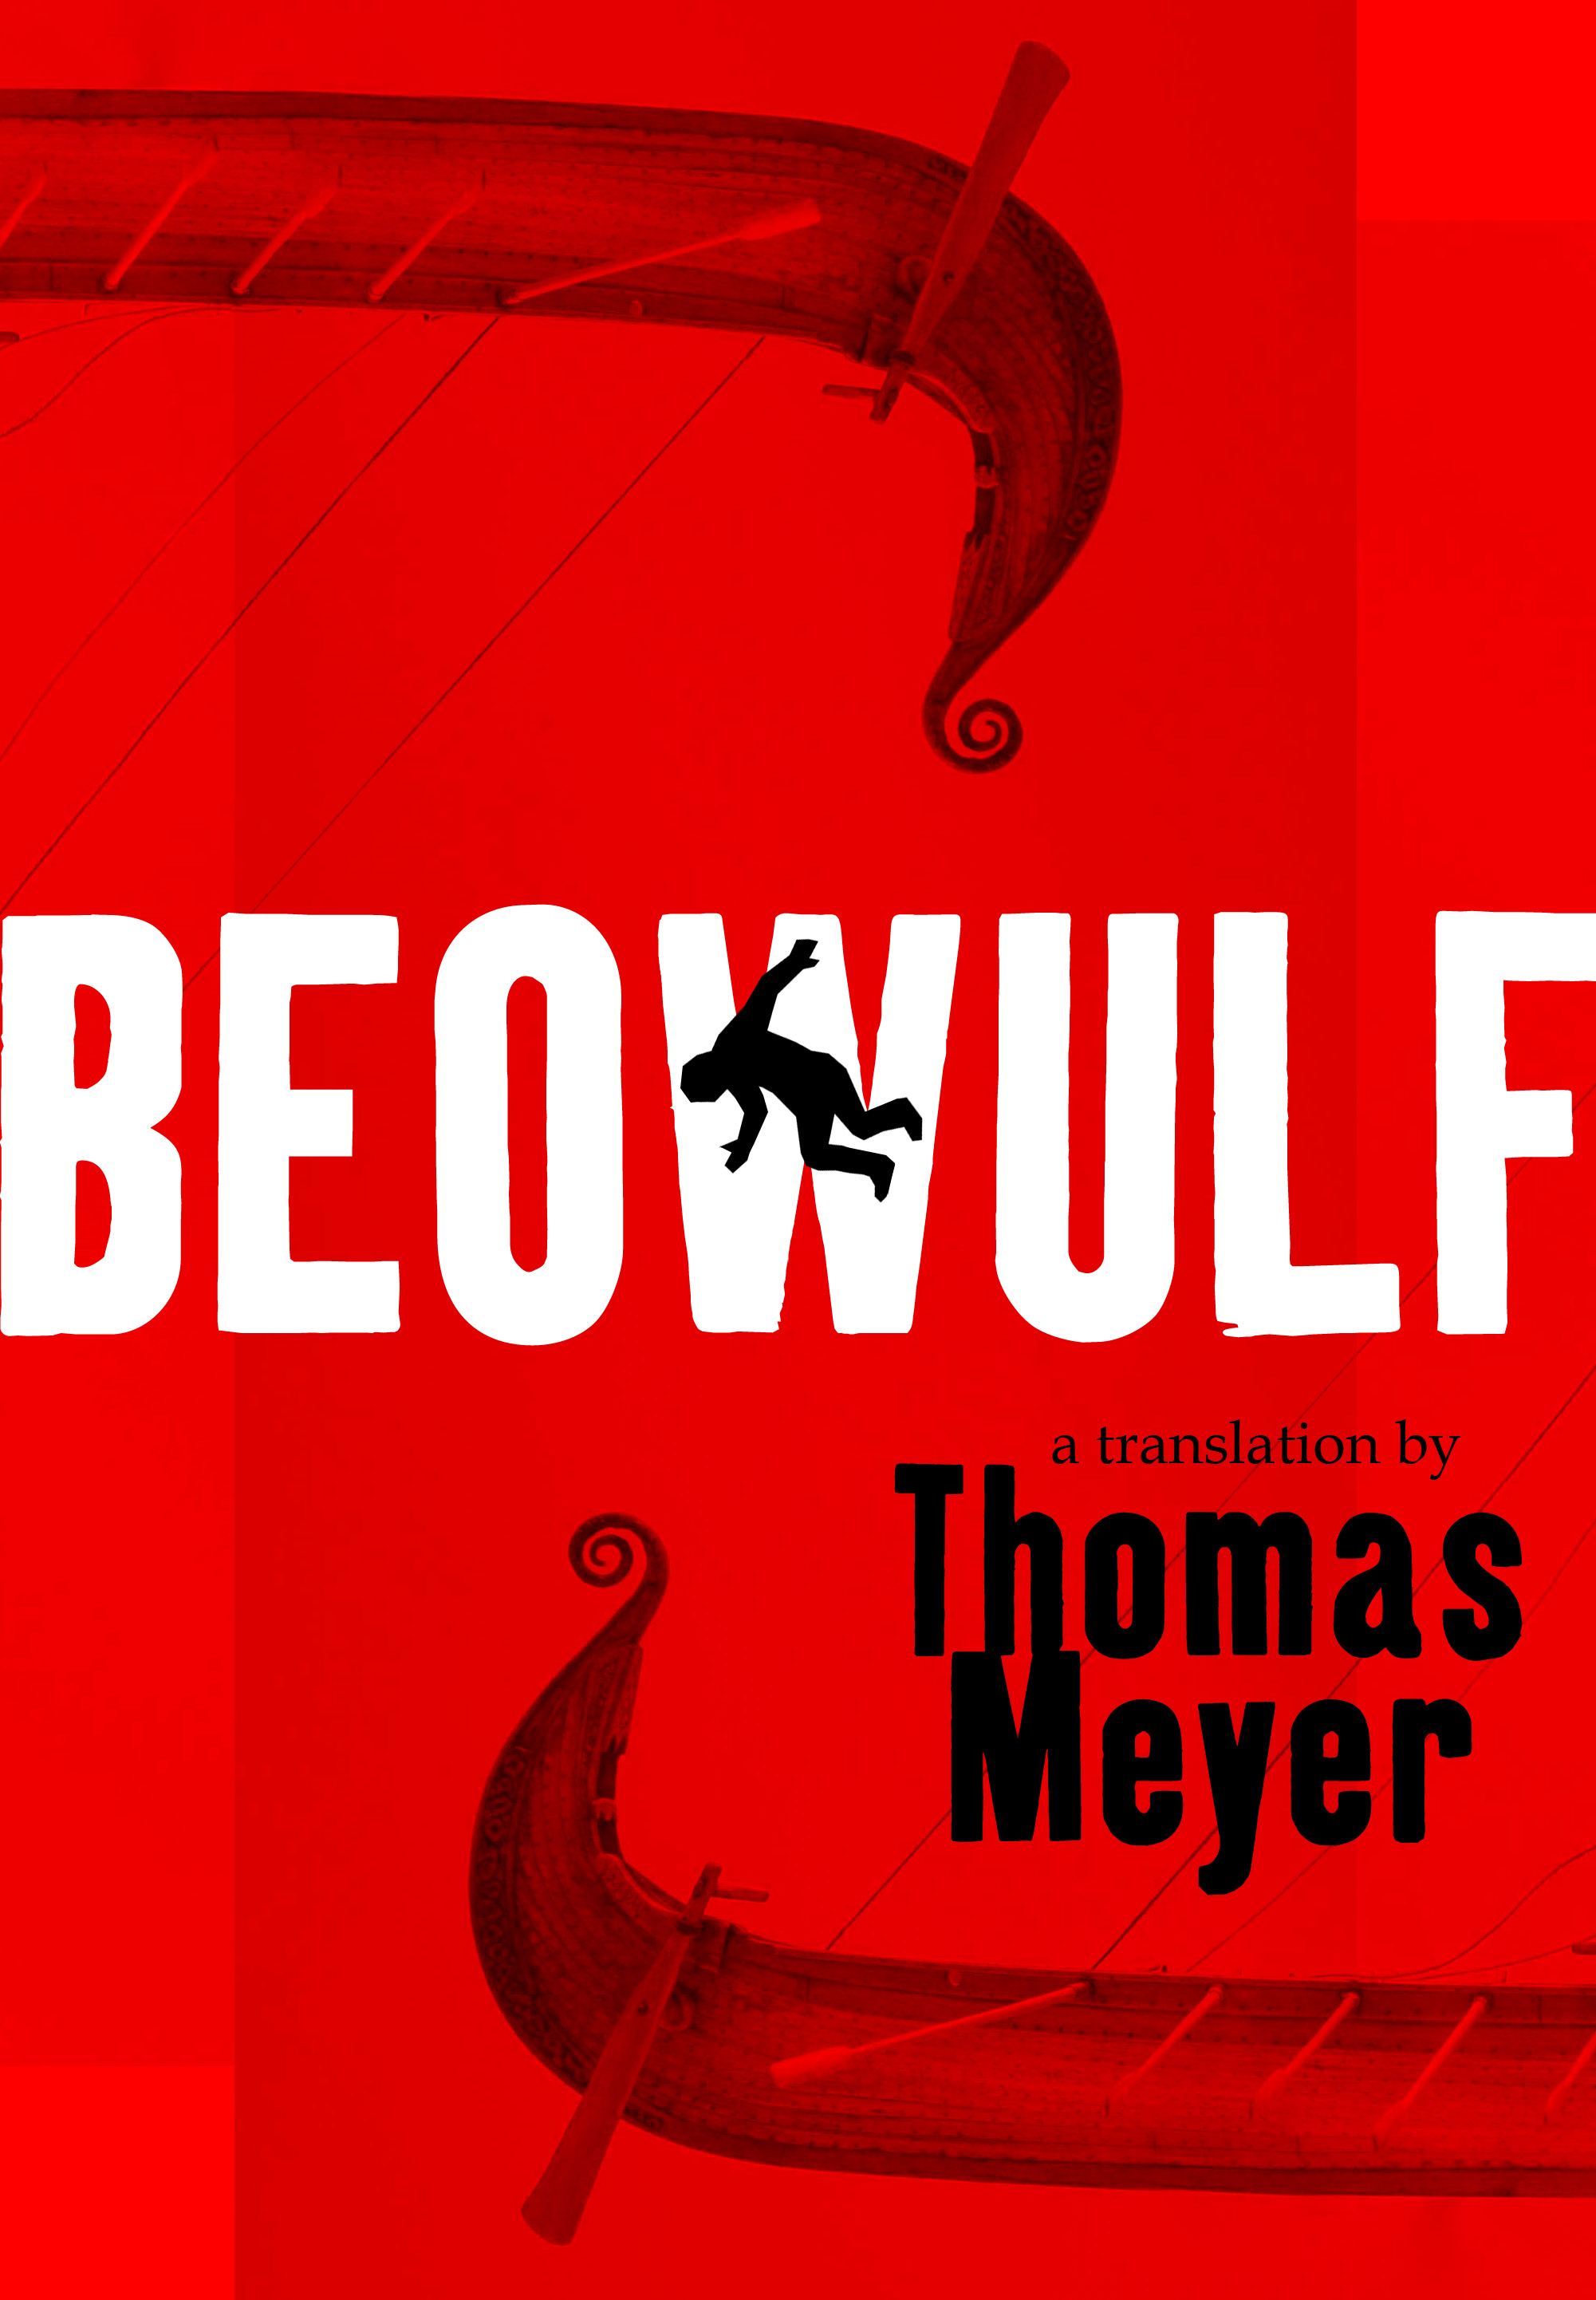 Beowulf: A Translation (punctum books, 2012)